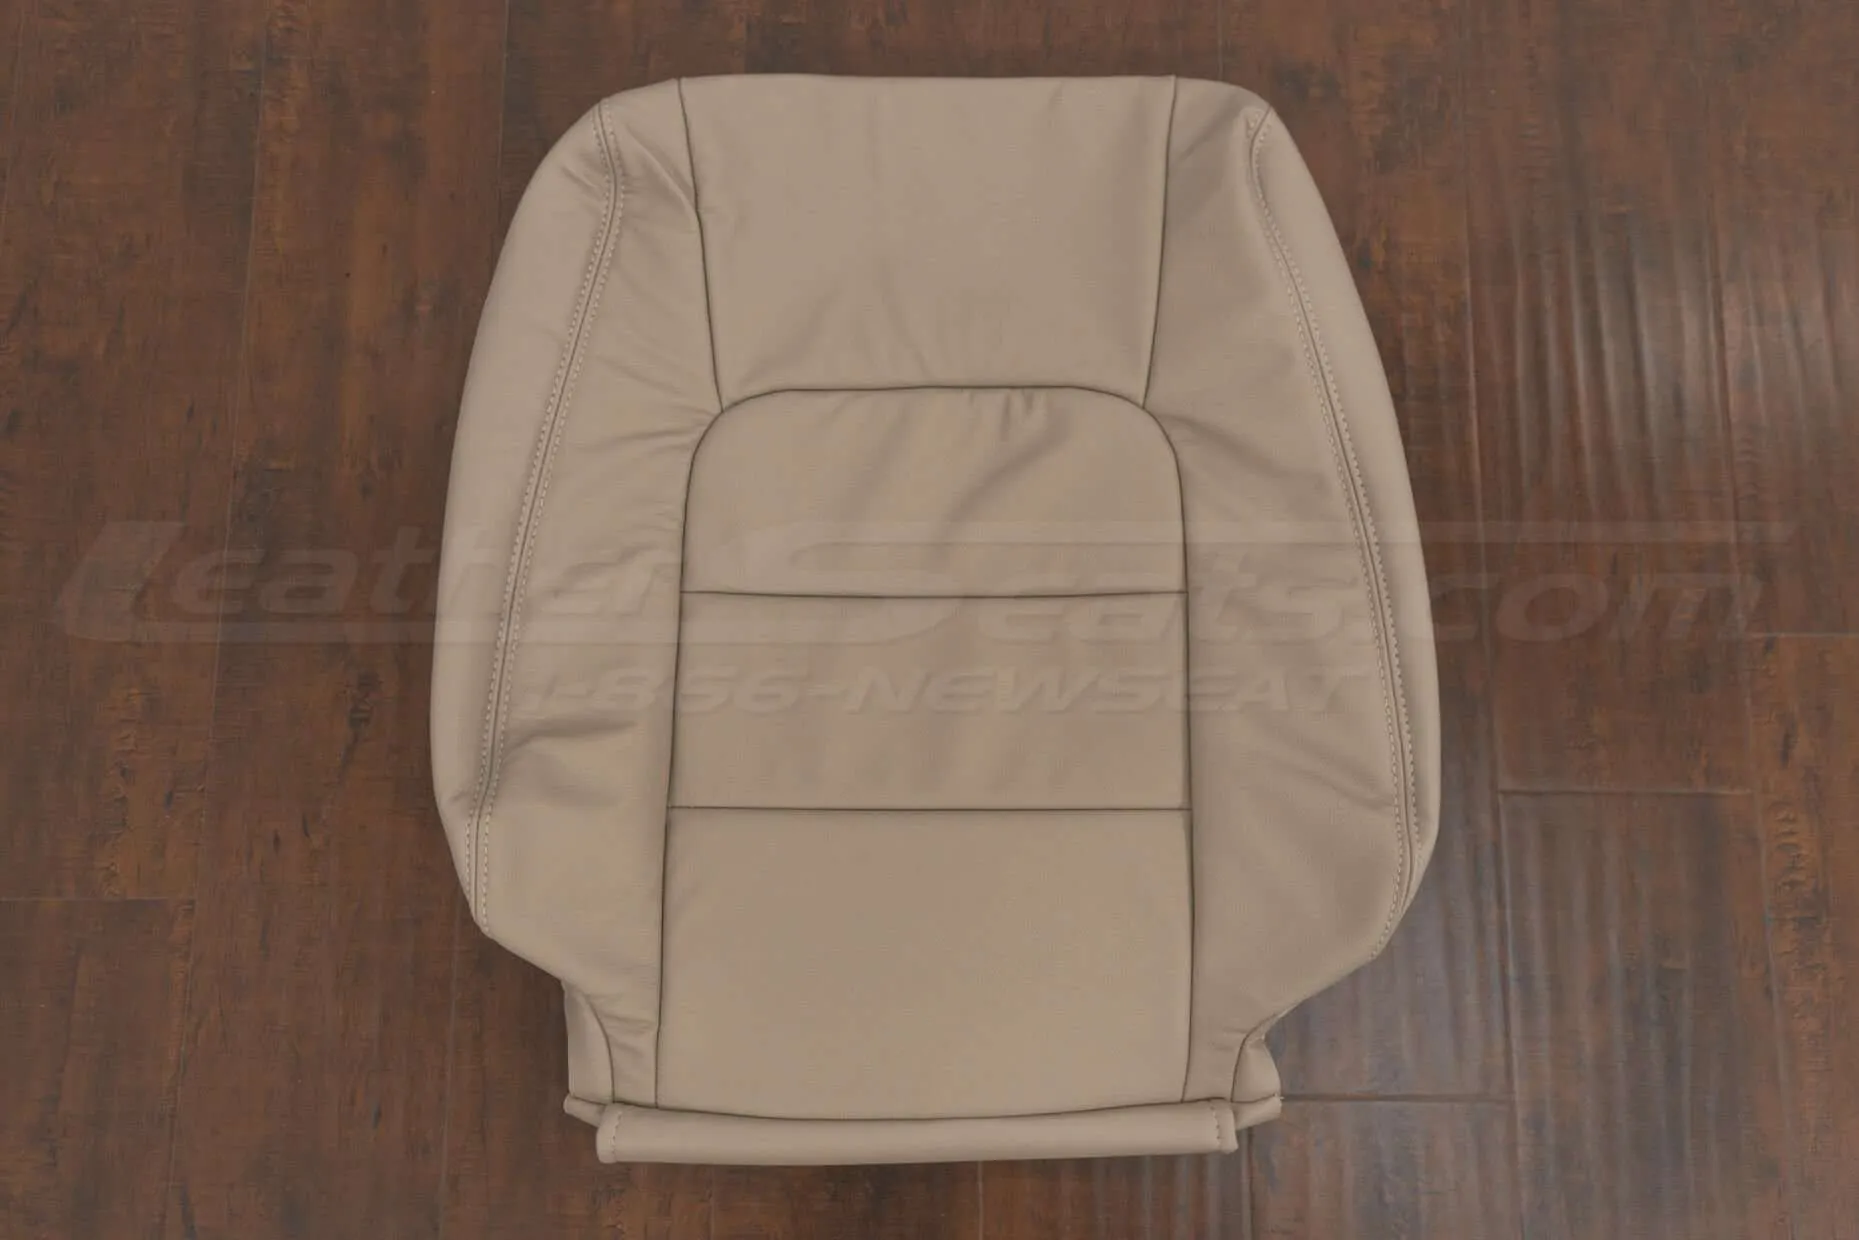 2002 Lexus LX470 leather backrest upholstery